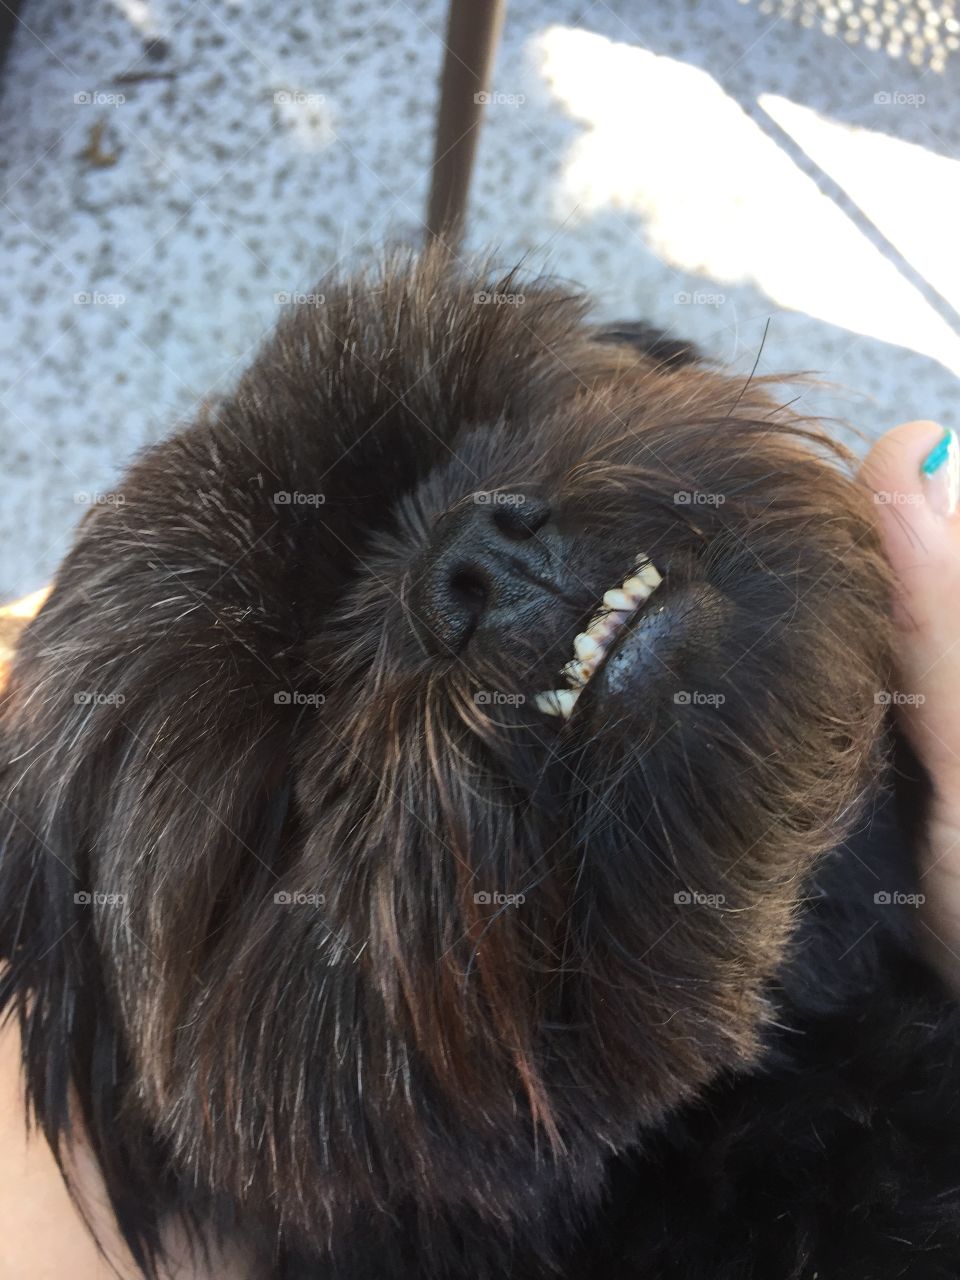 Smiling dog!